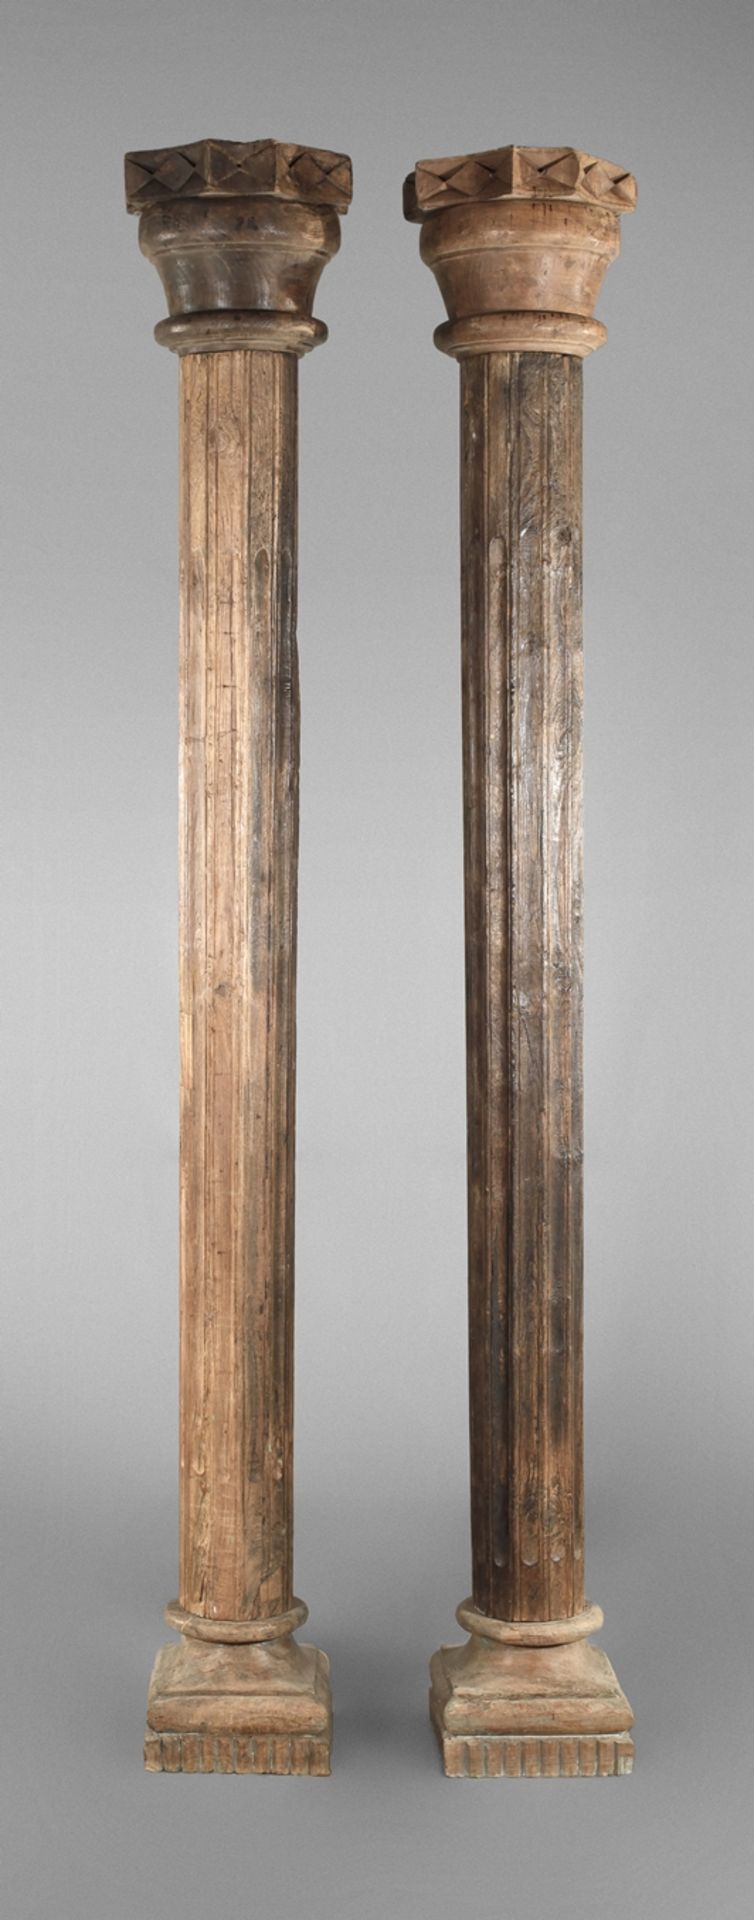 Pair of wooden columns 